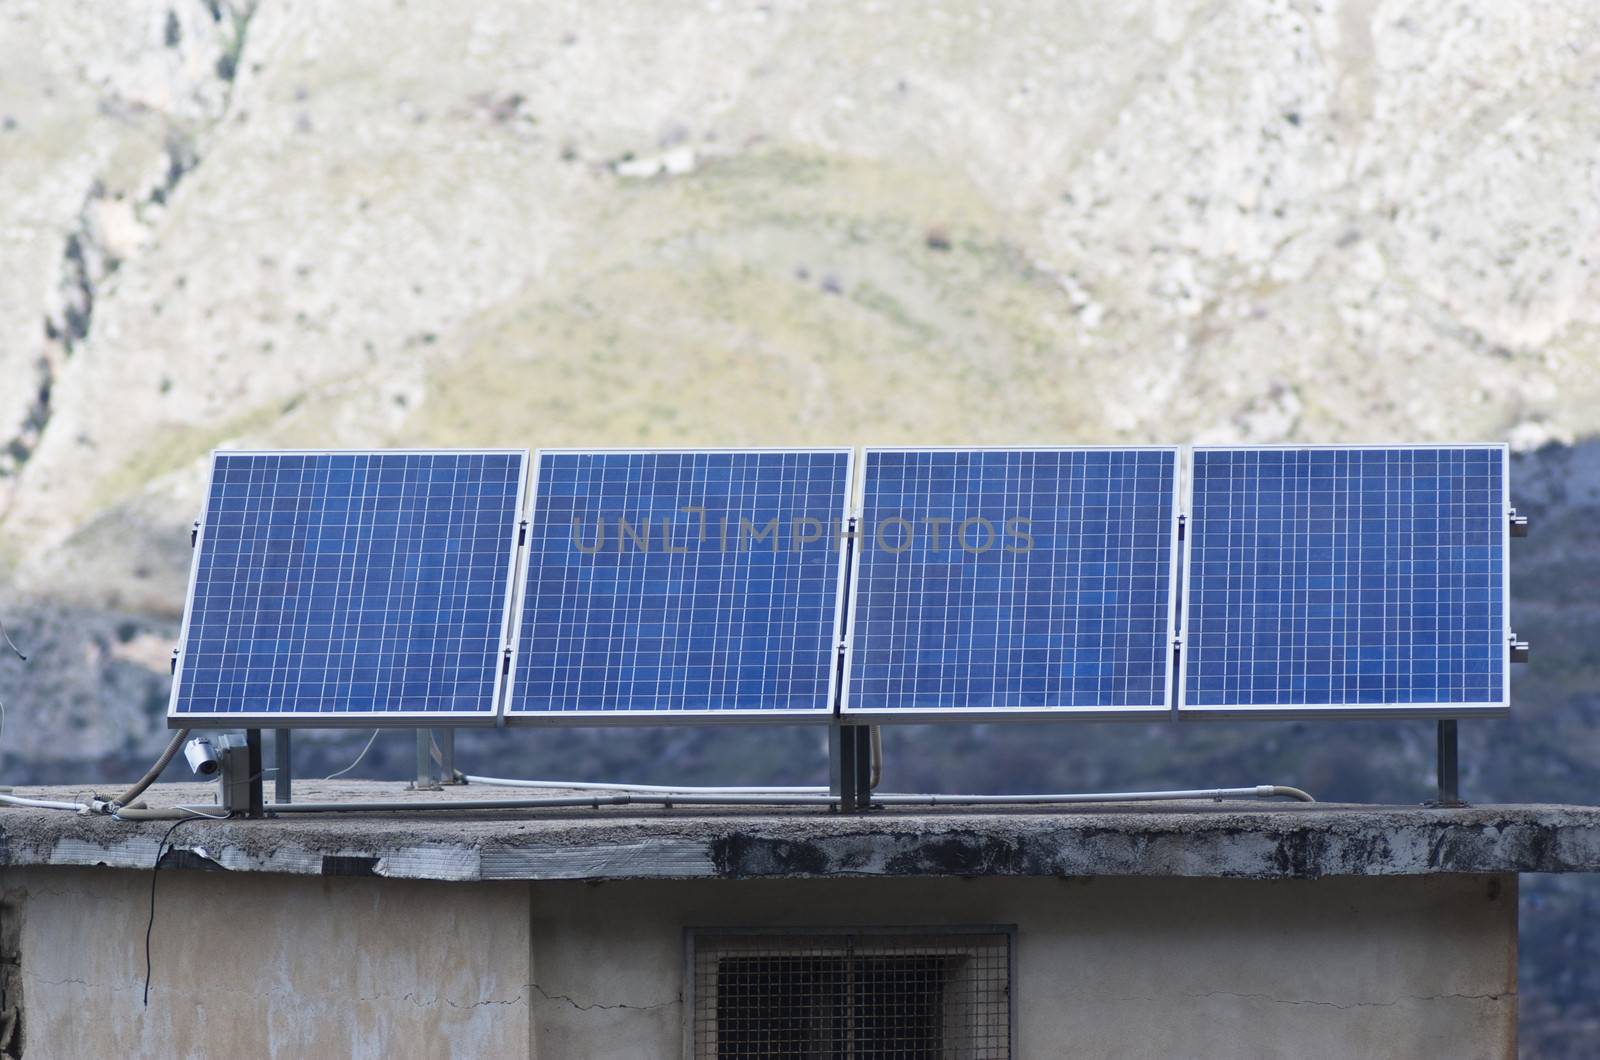 View of solar panels in the Madonie mountains by gandolfocannatella